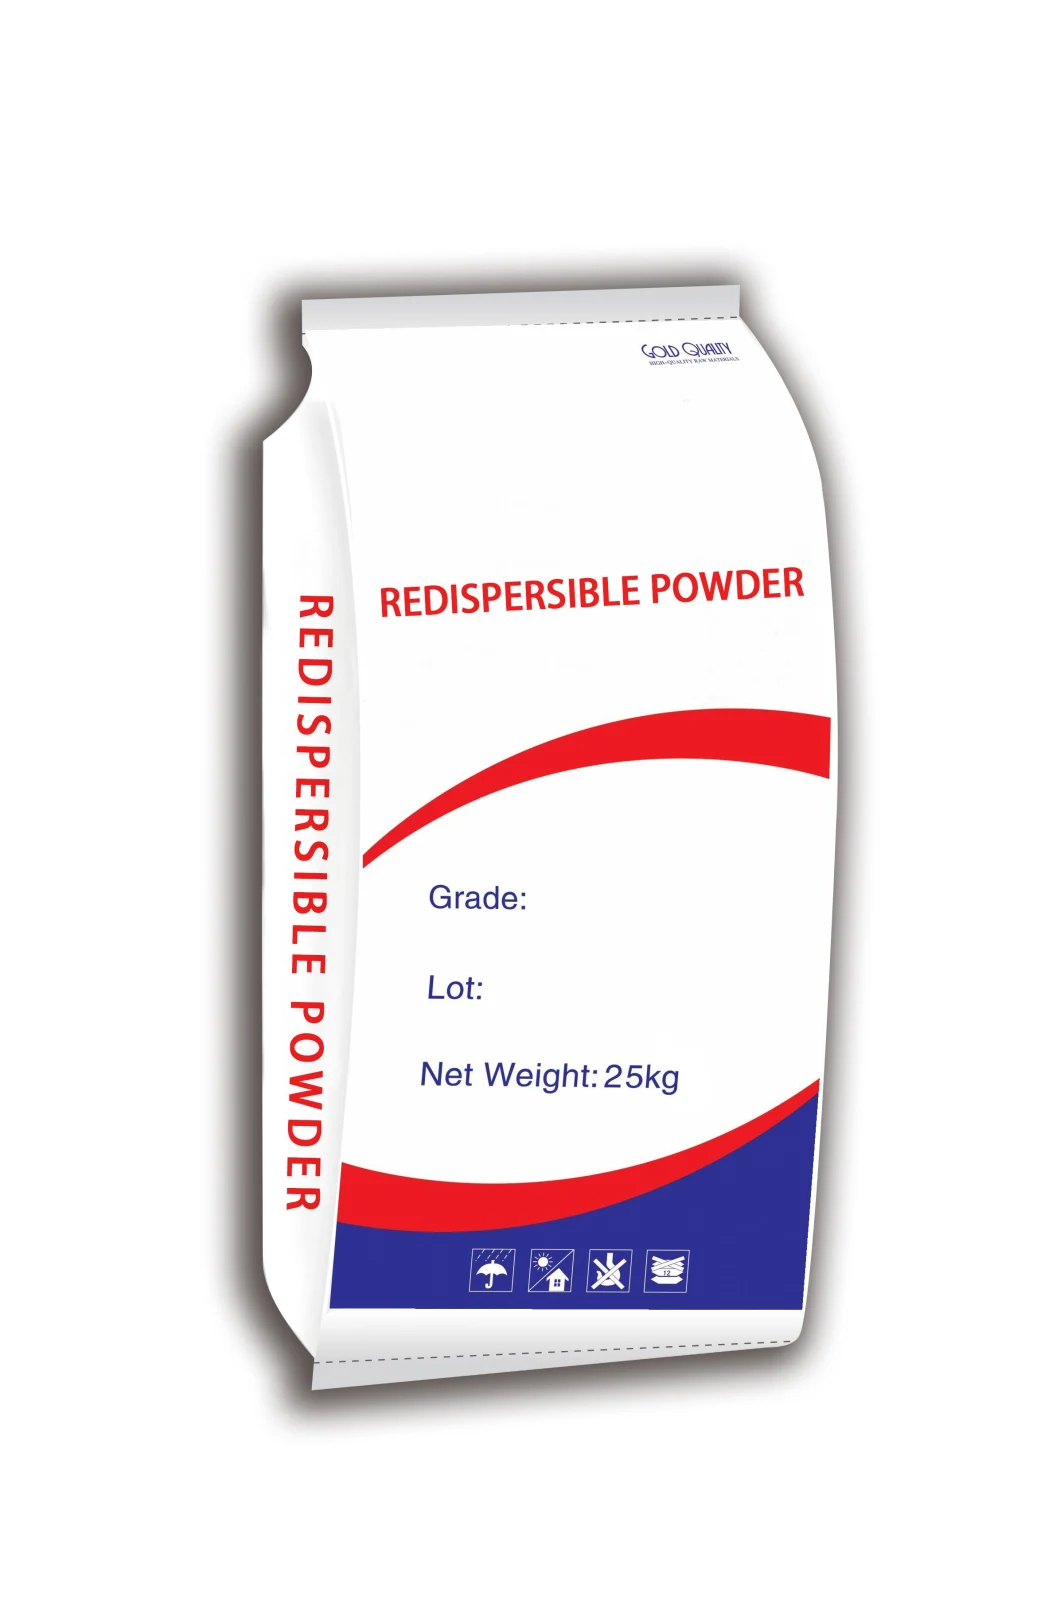 Rdp Powder Emulsion Powder Redispersible Acrylic Polymer Powderfor Construction